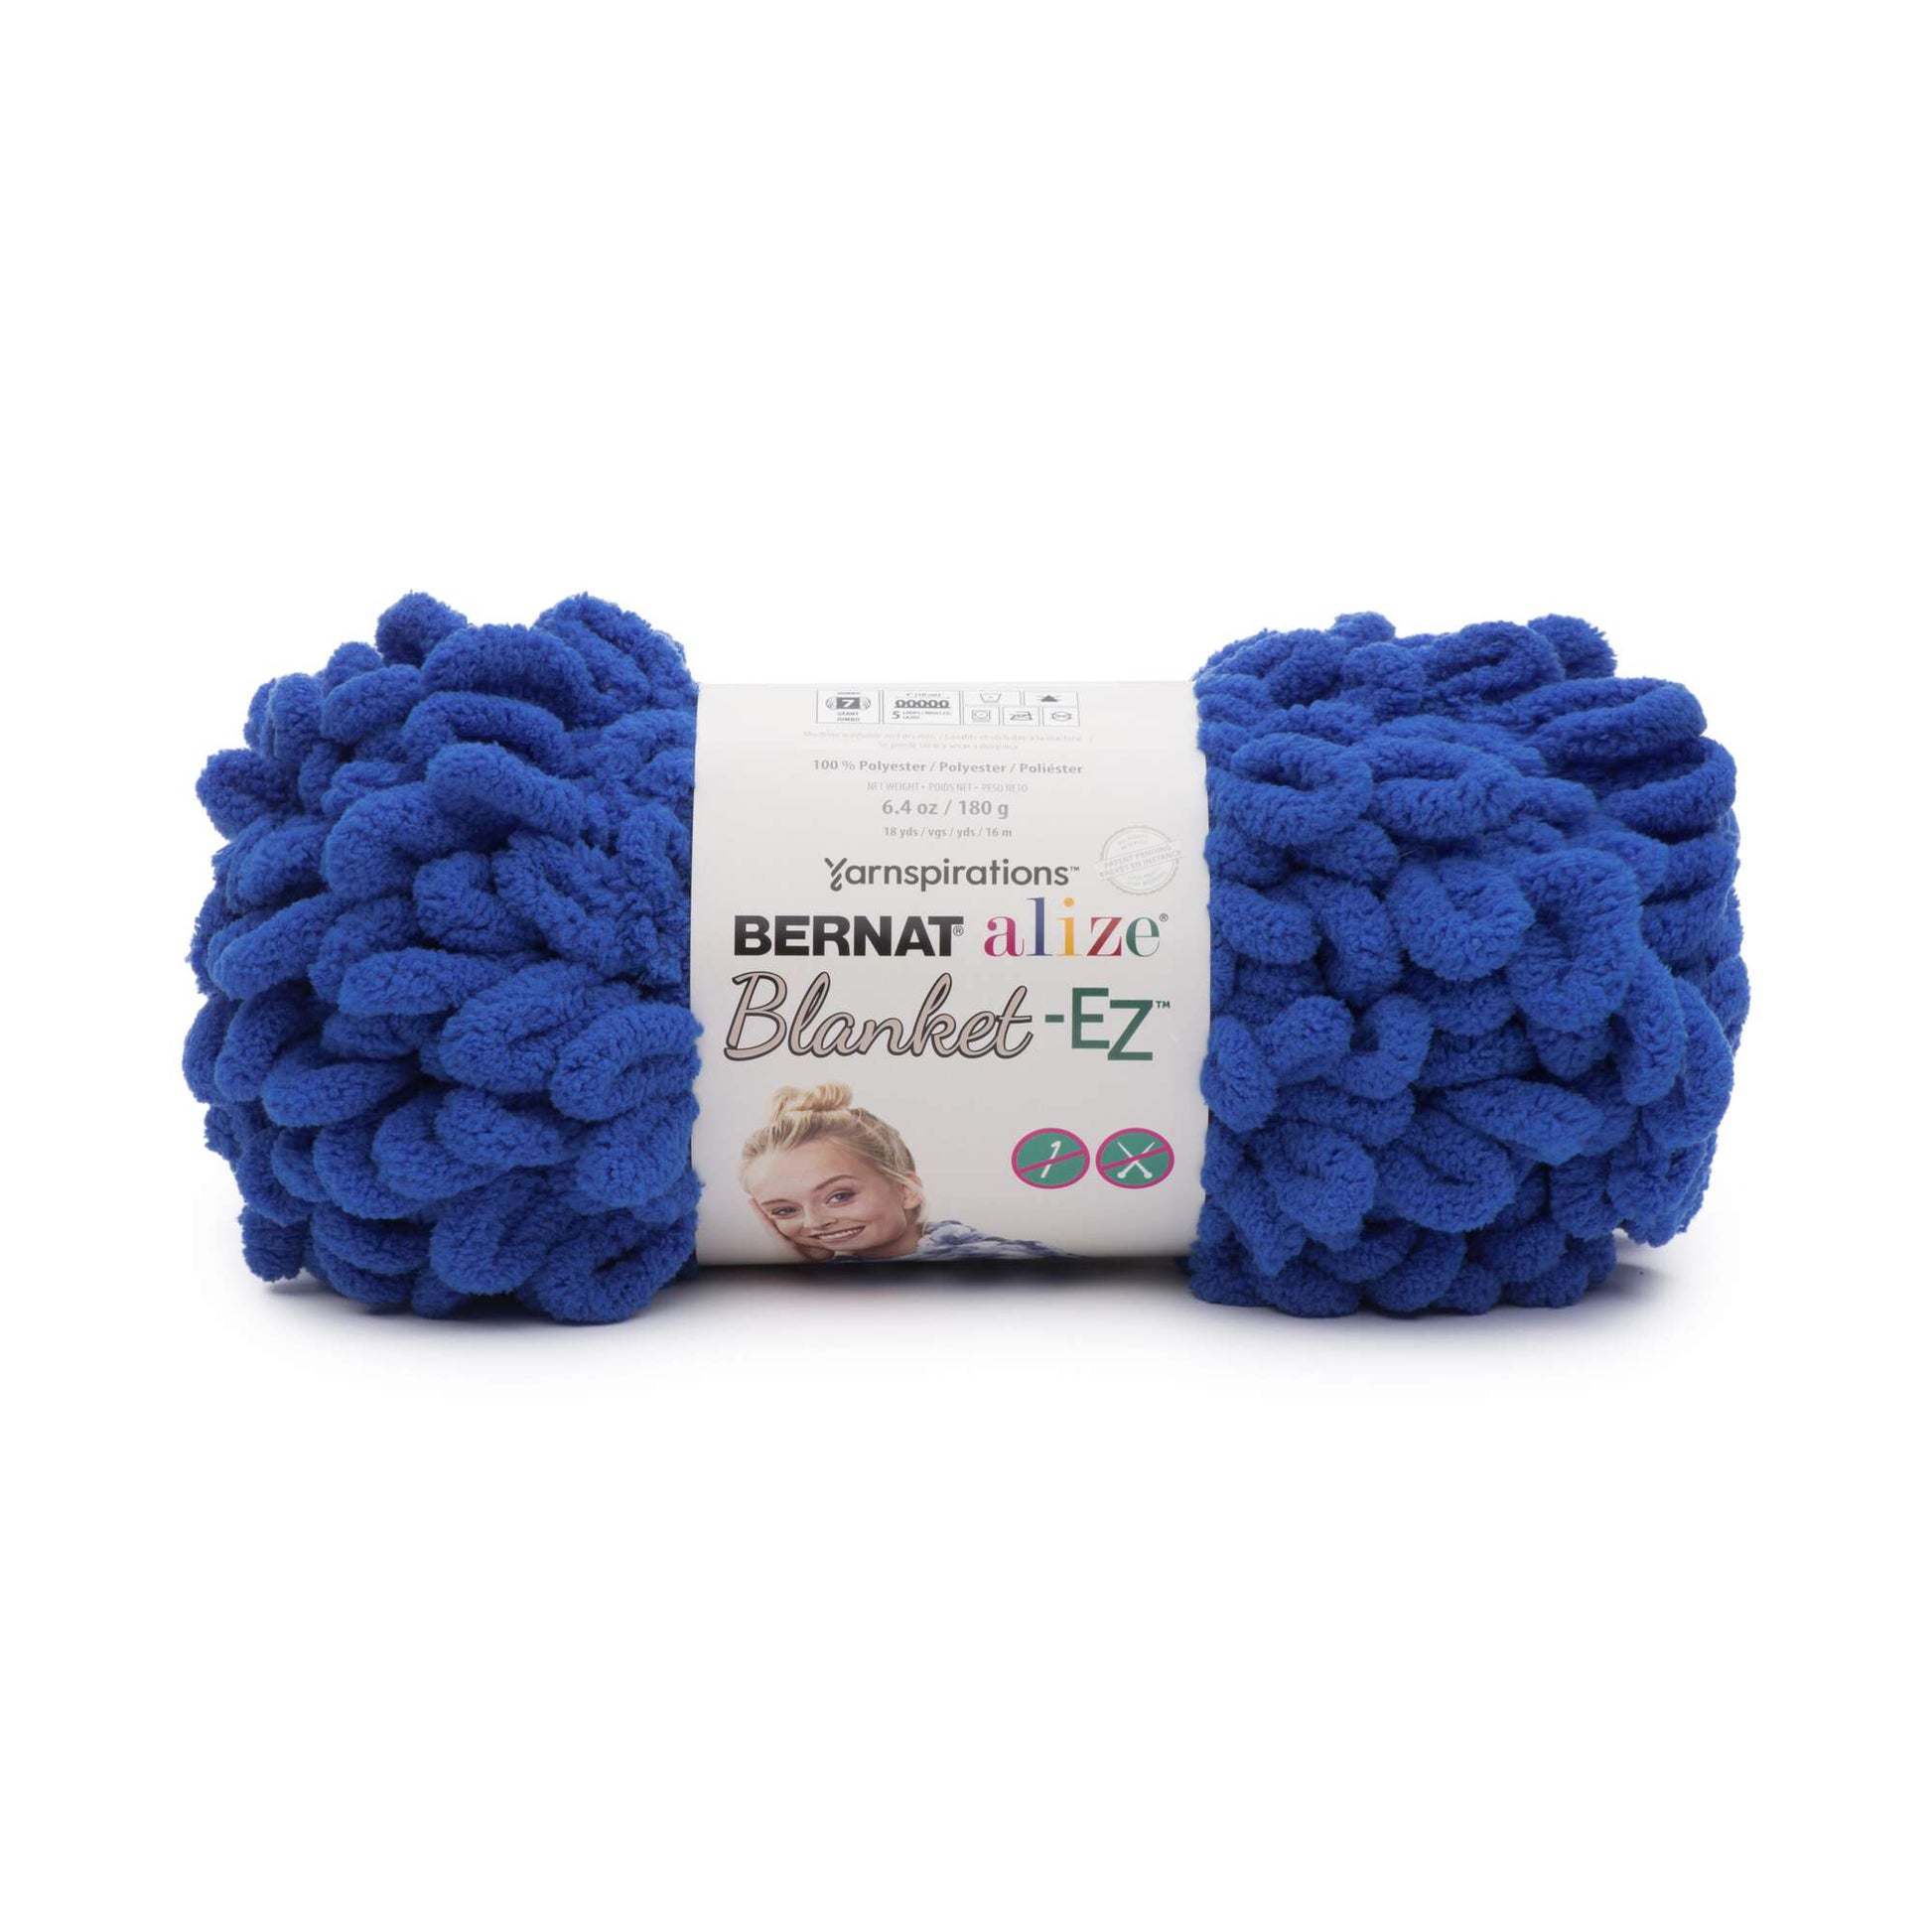 Bernat Alize Blanket-EZ Yarn Bright Blue